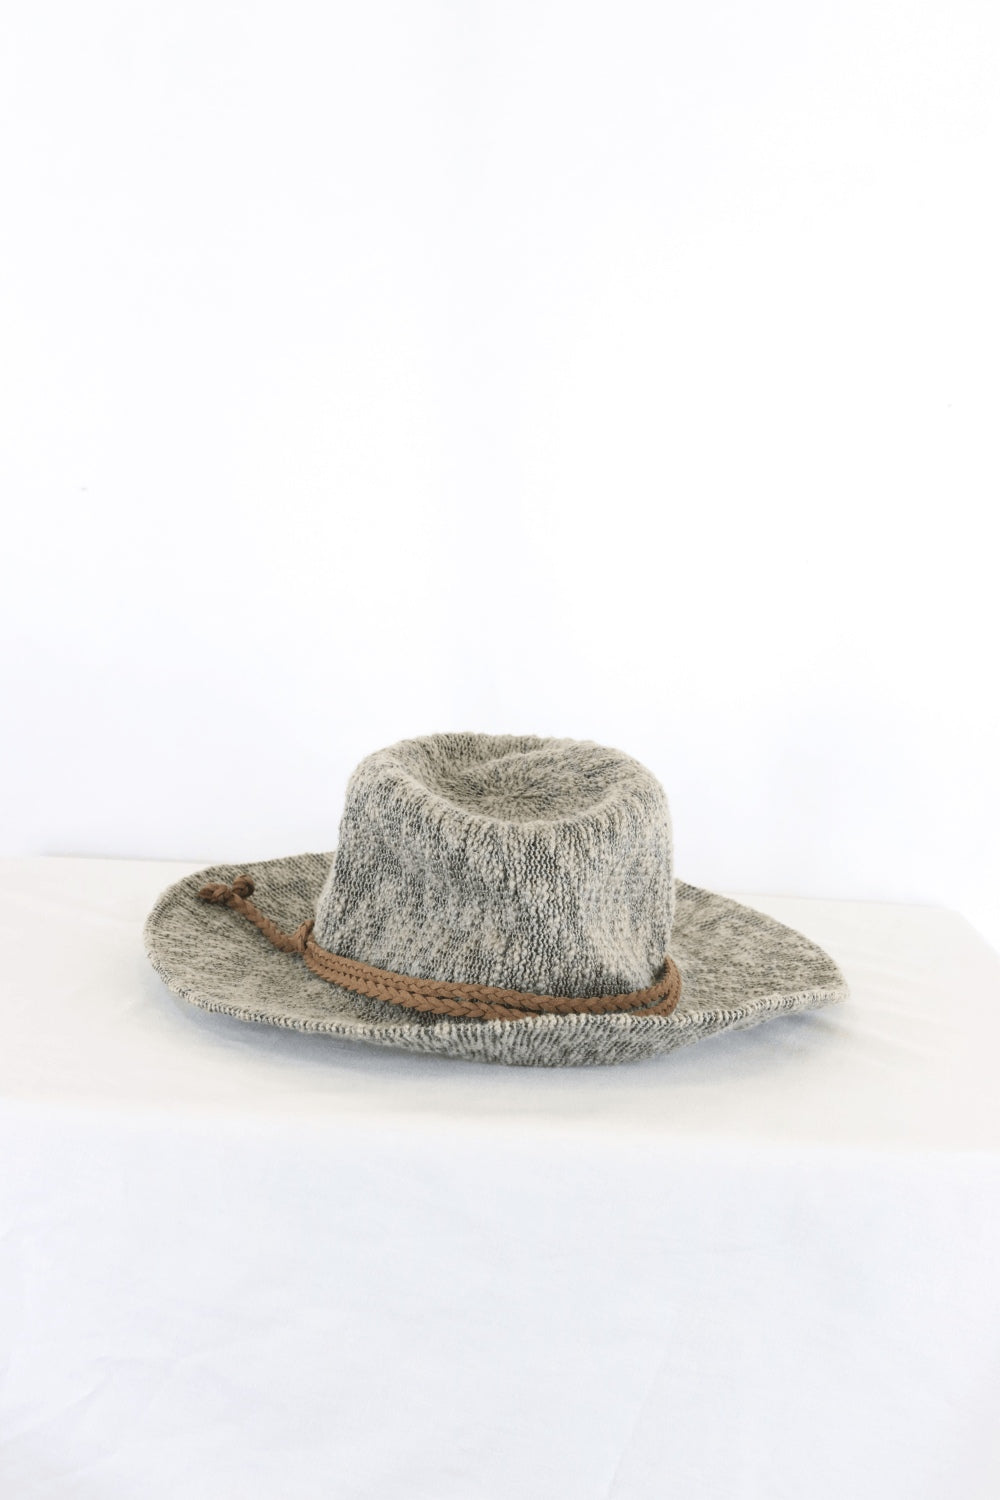 Kooringal Grey Hat